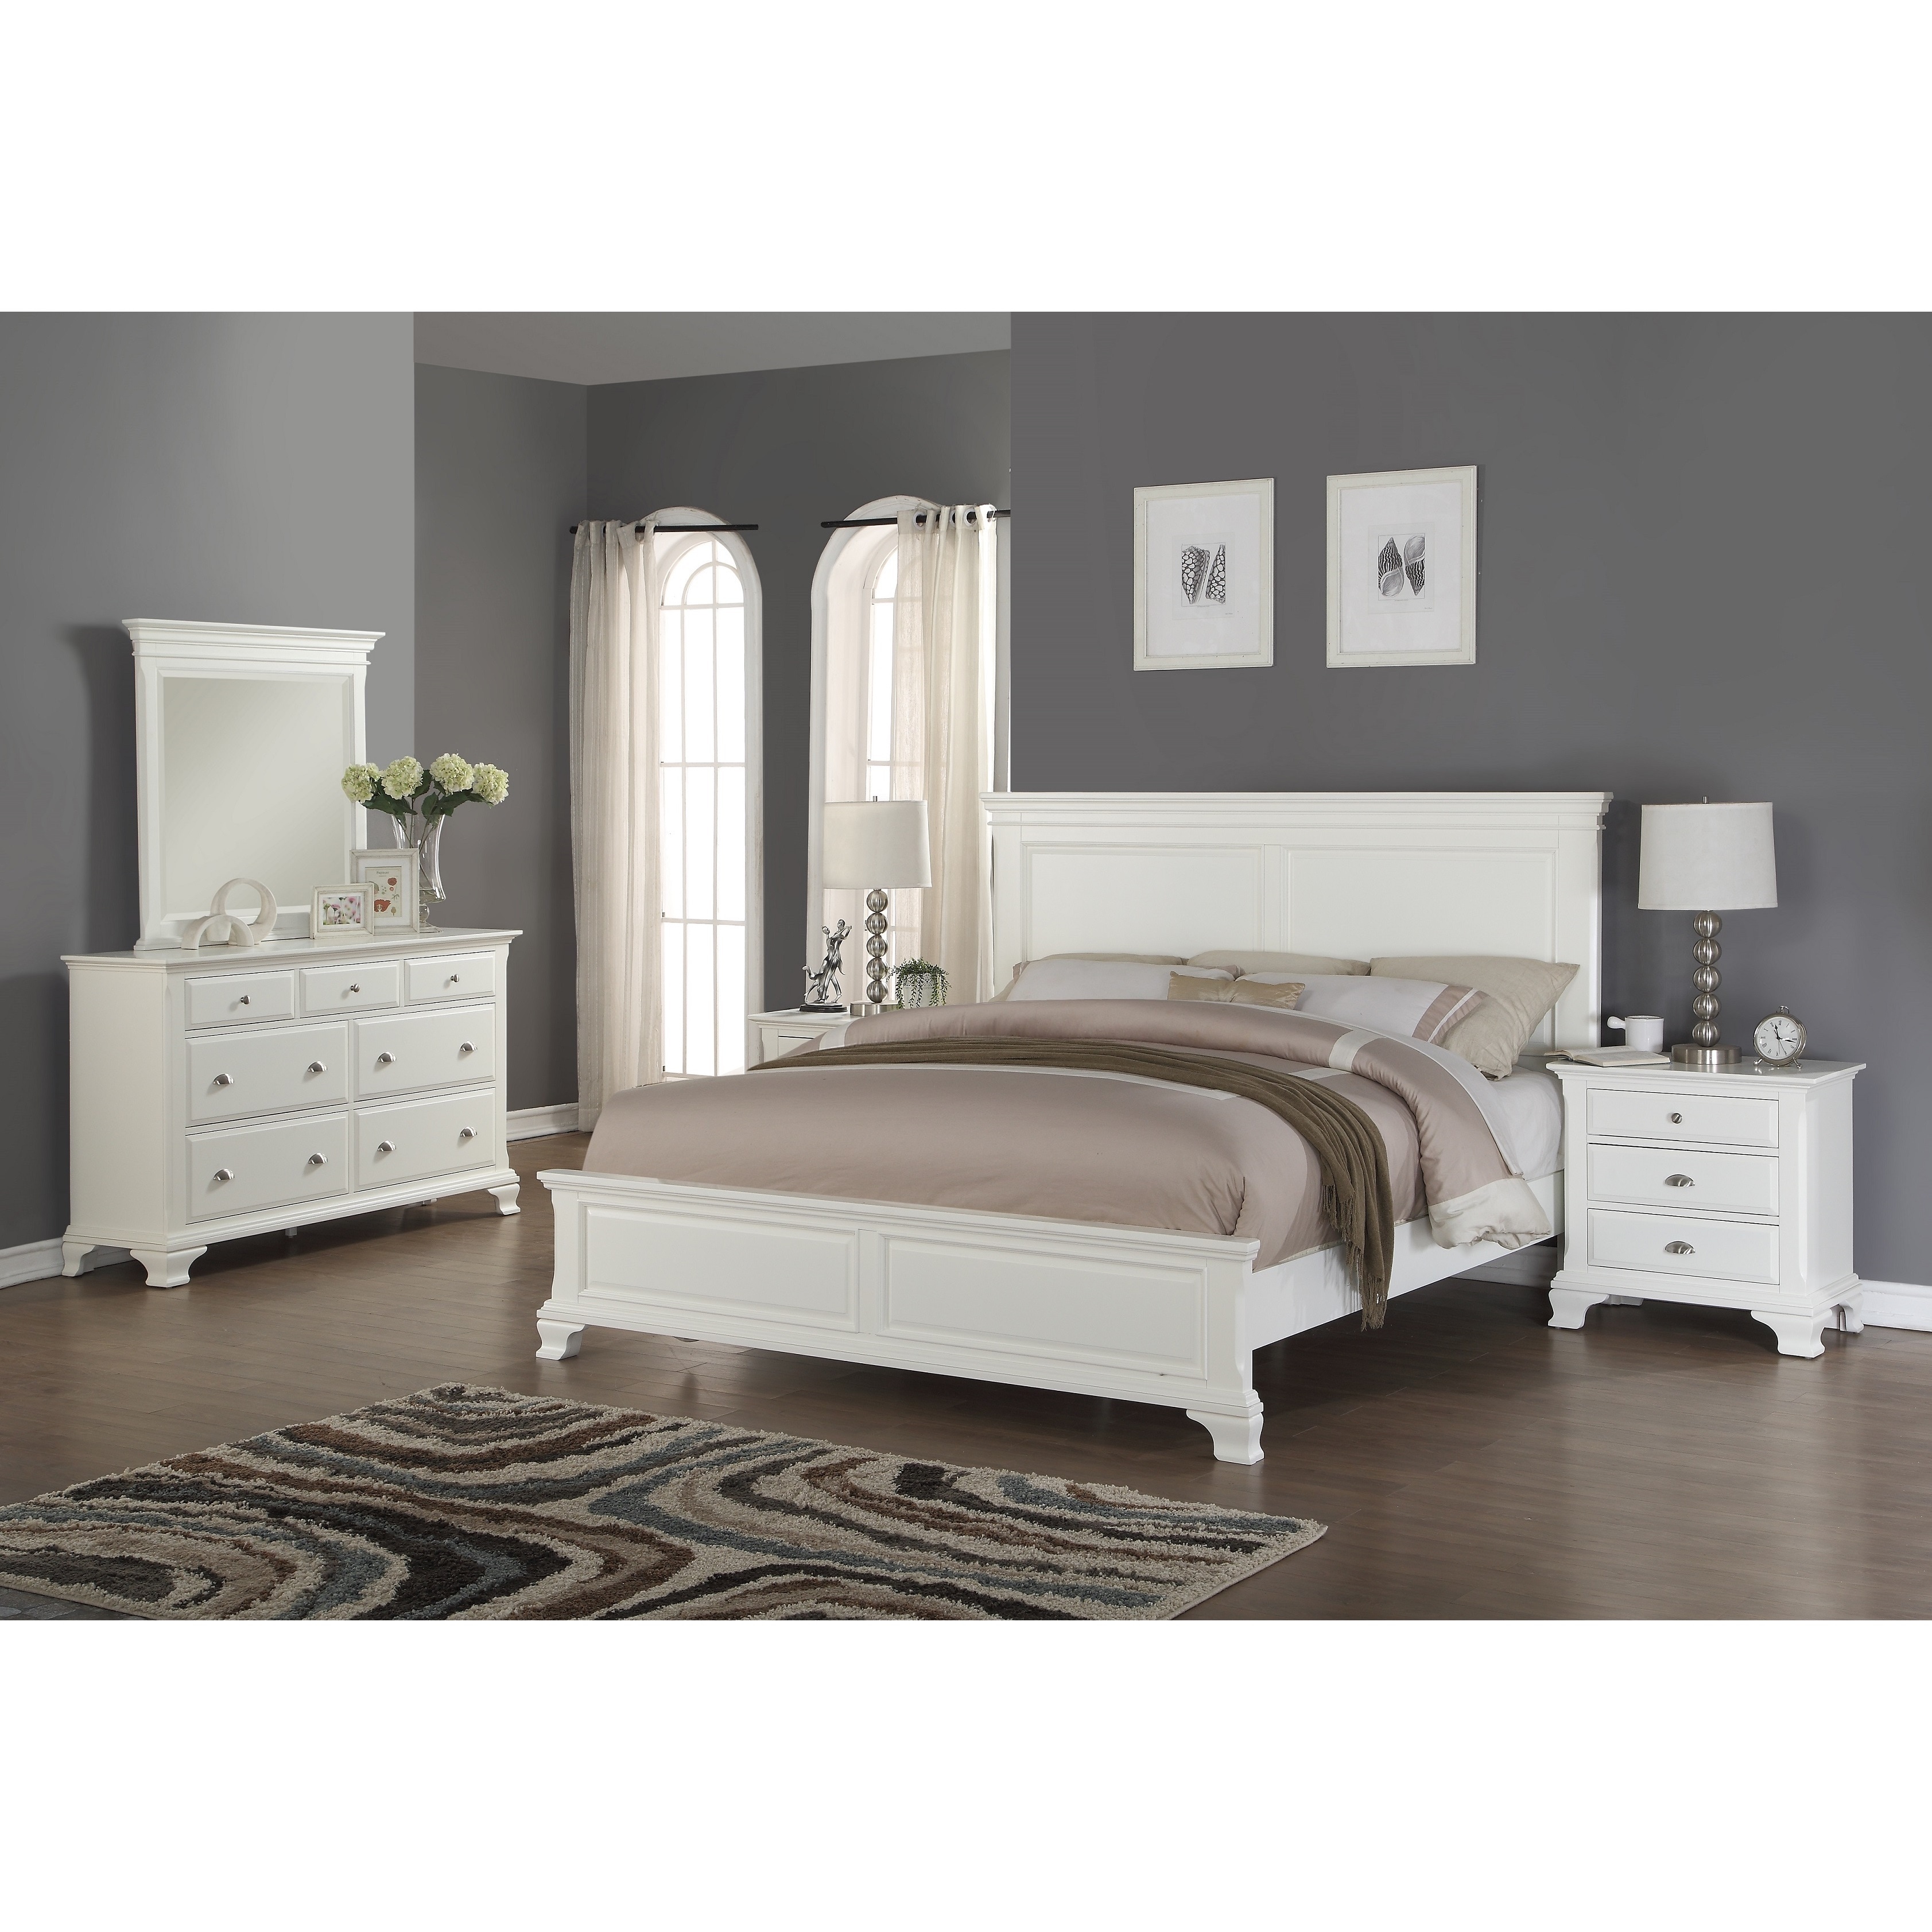 Laveno 012 White Wood Bedroom Furniture Set, Includes King White ...